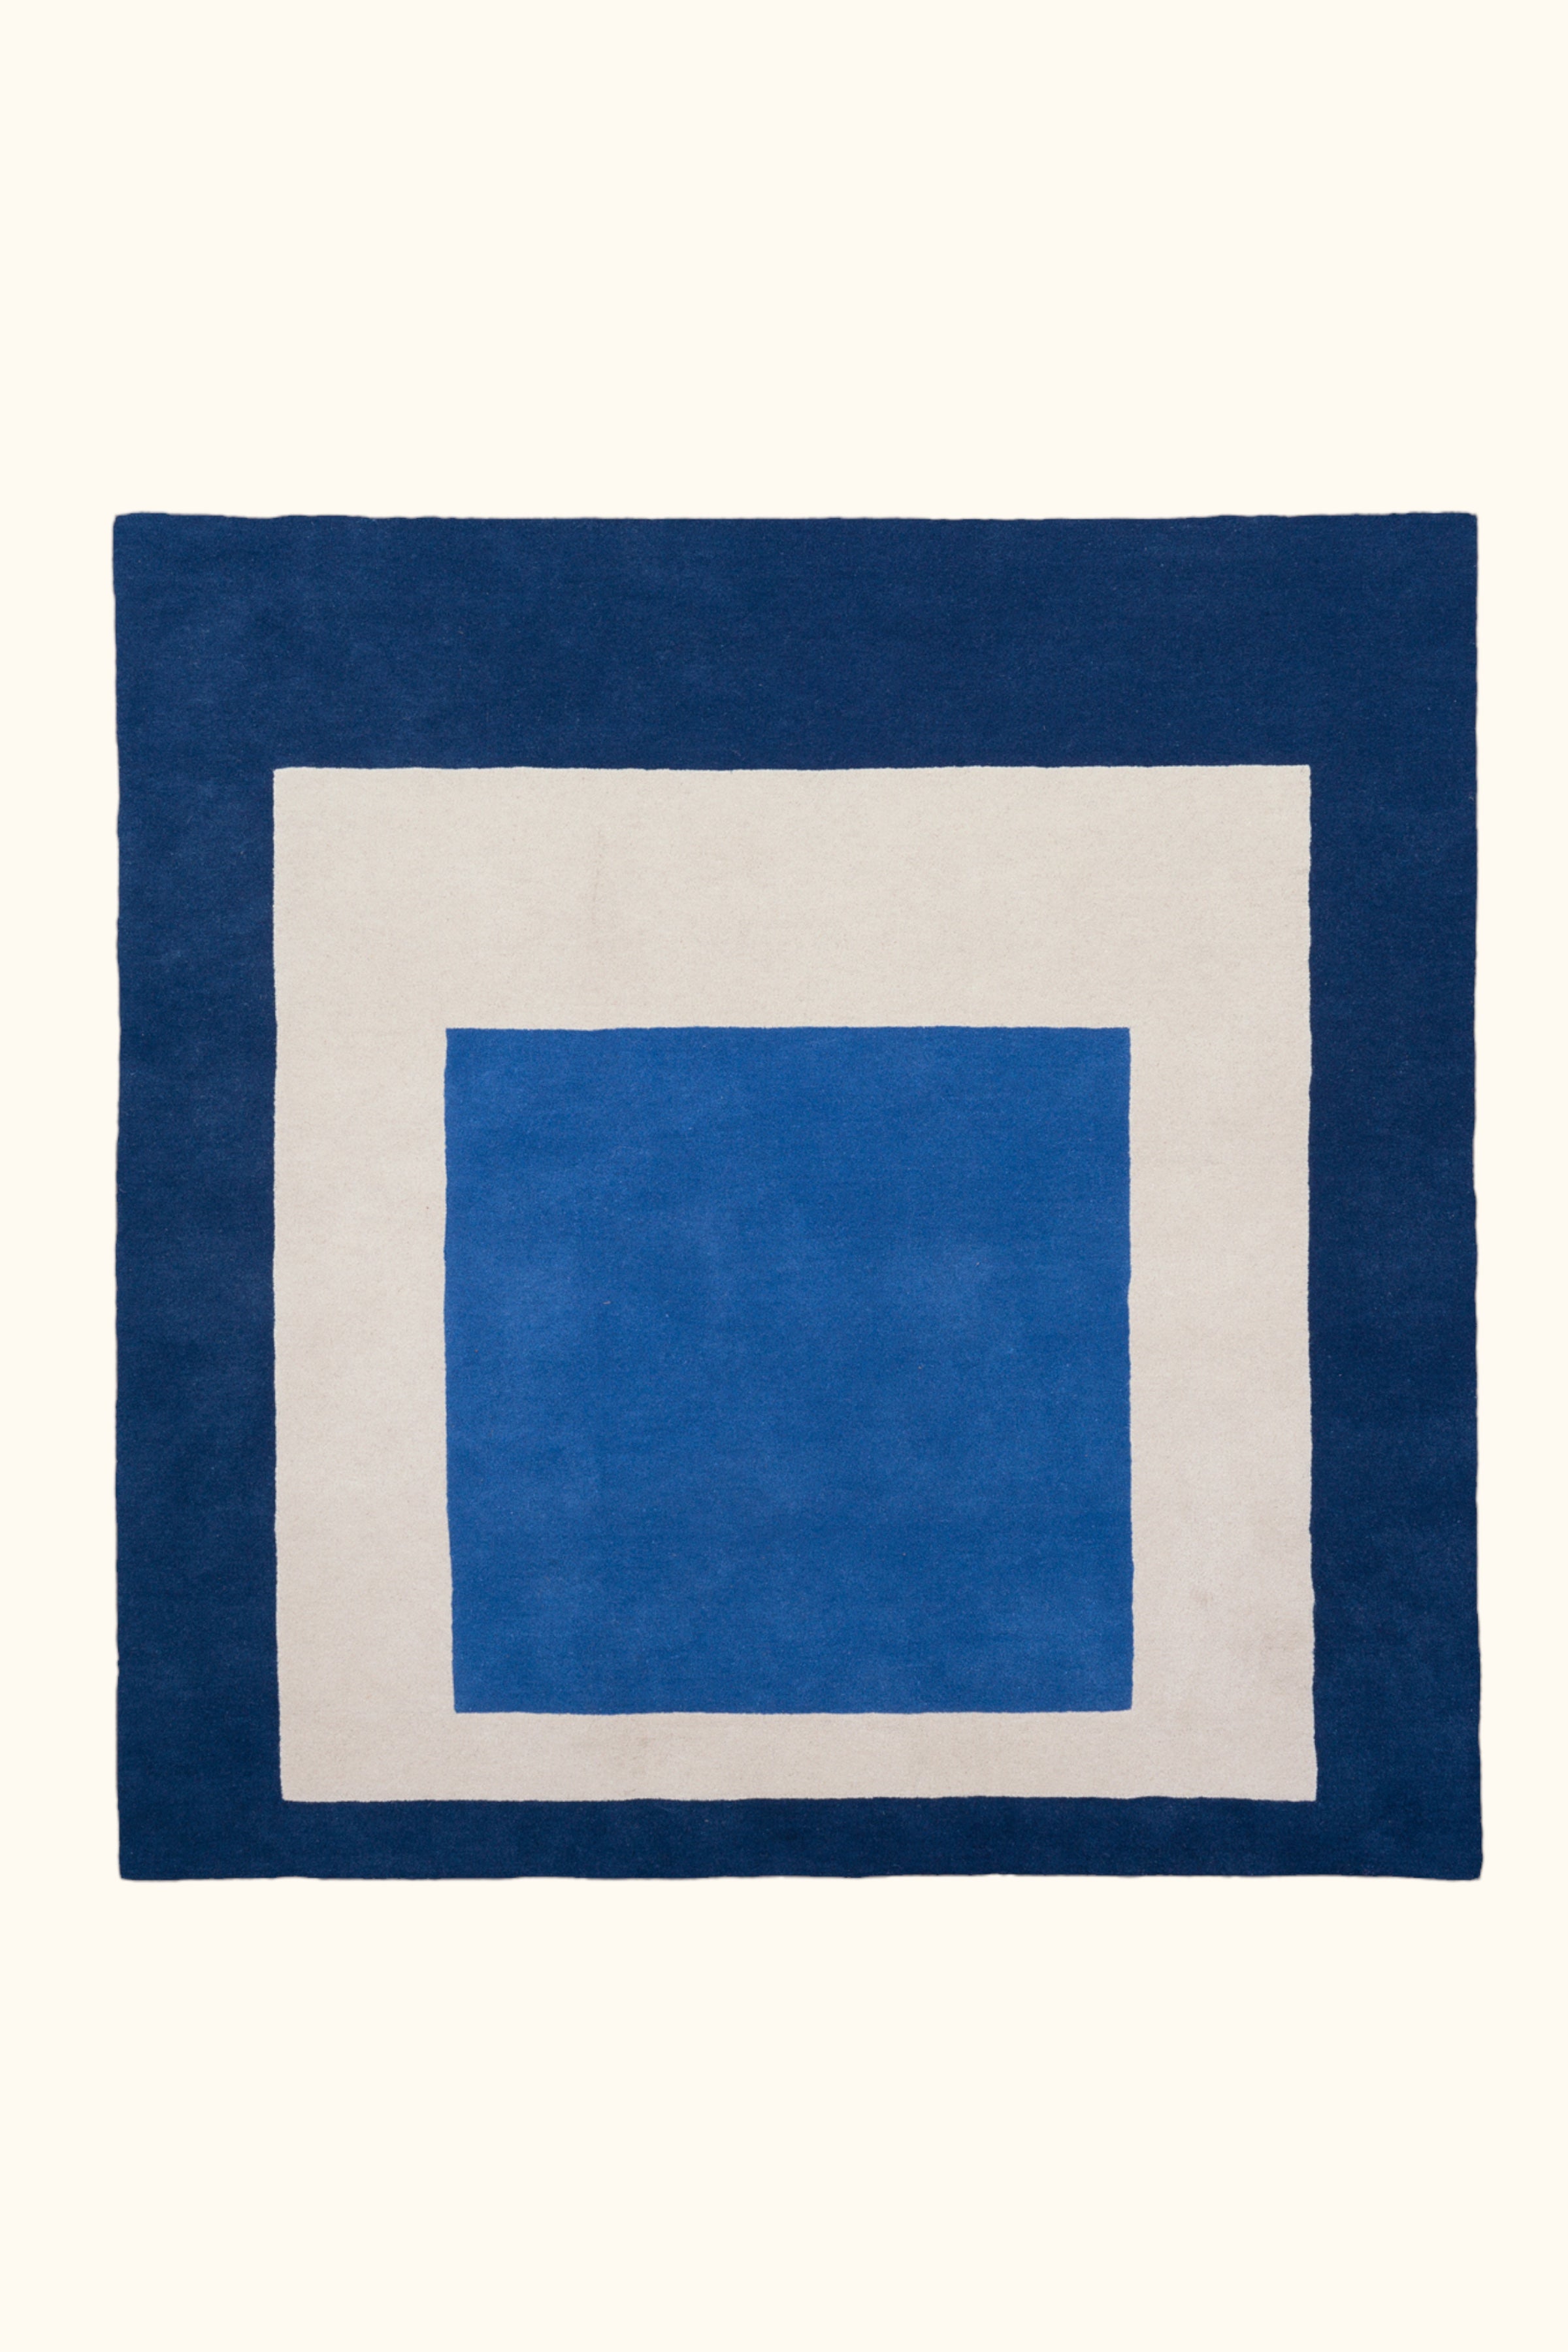 Josef Albers Bauhaus rug 'HOMAGE TO THE SQUARE' Blue/White 175x175 cm